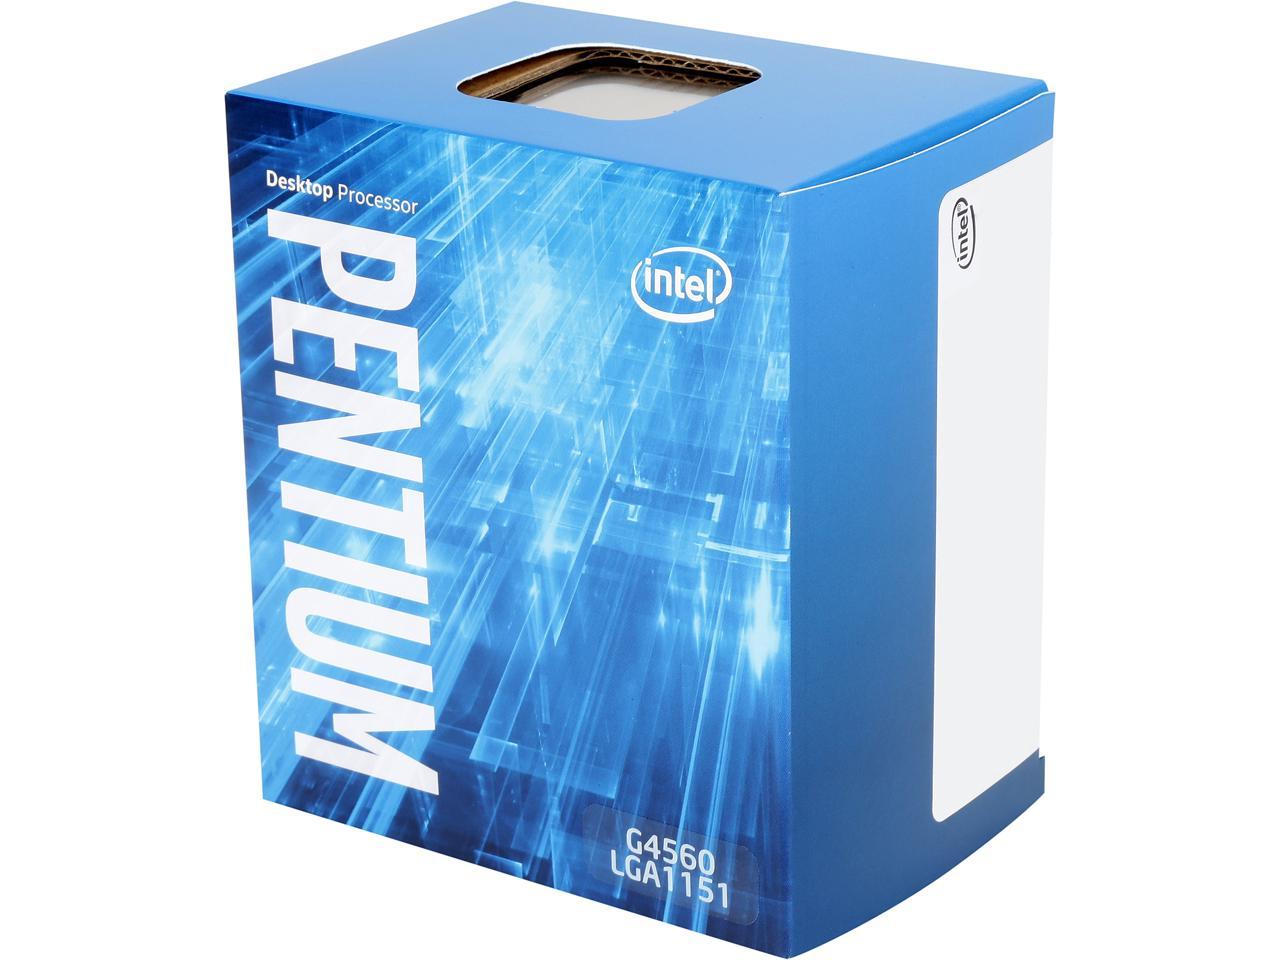 react Annihilate Plague Intel Pentium G4560 Kaby Lake Dual-Core 3.5 GHz LGA 1151 54W BX80677G4560  Desktop Processor Intel HD Graphics 610 - Newegg.com